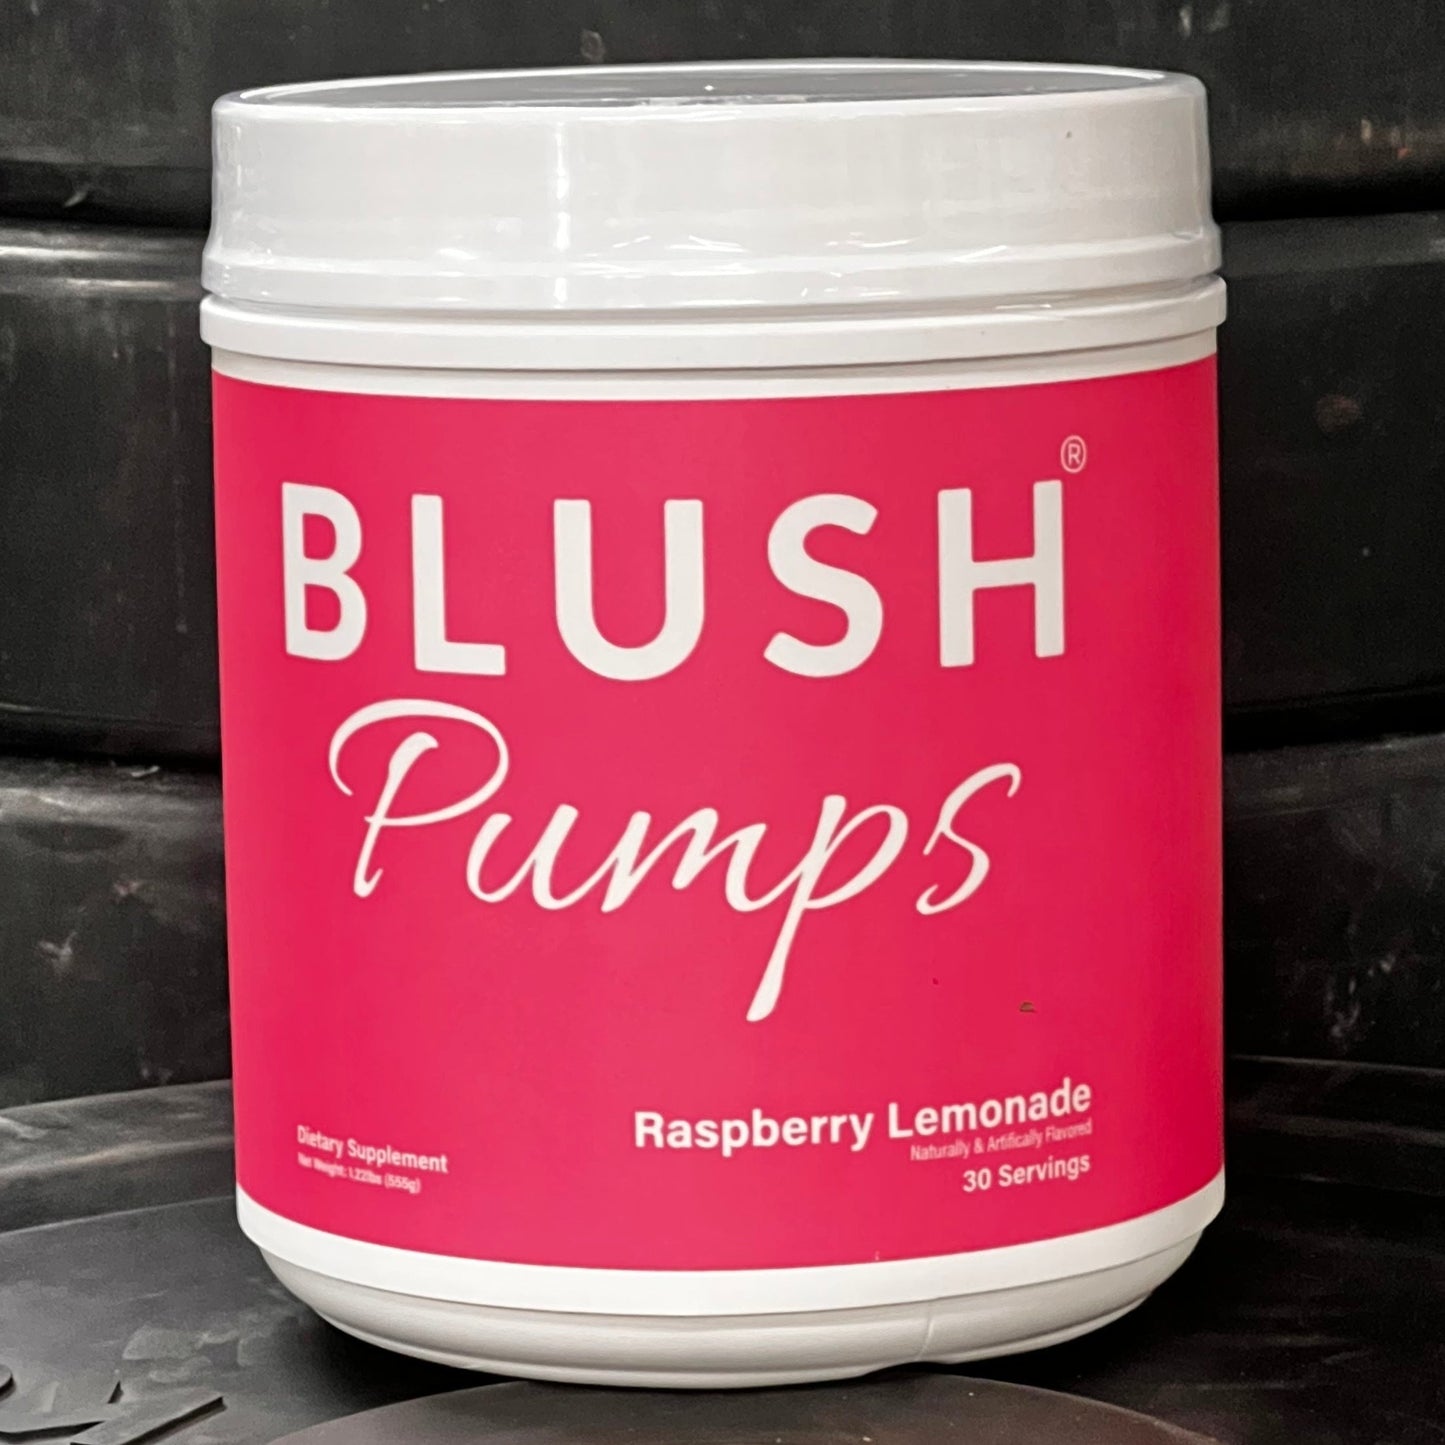 BLUSH Pumps - Raspberry Lemonade